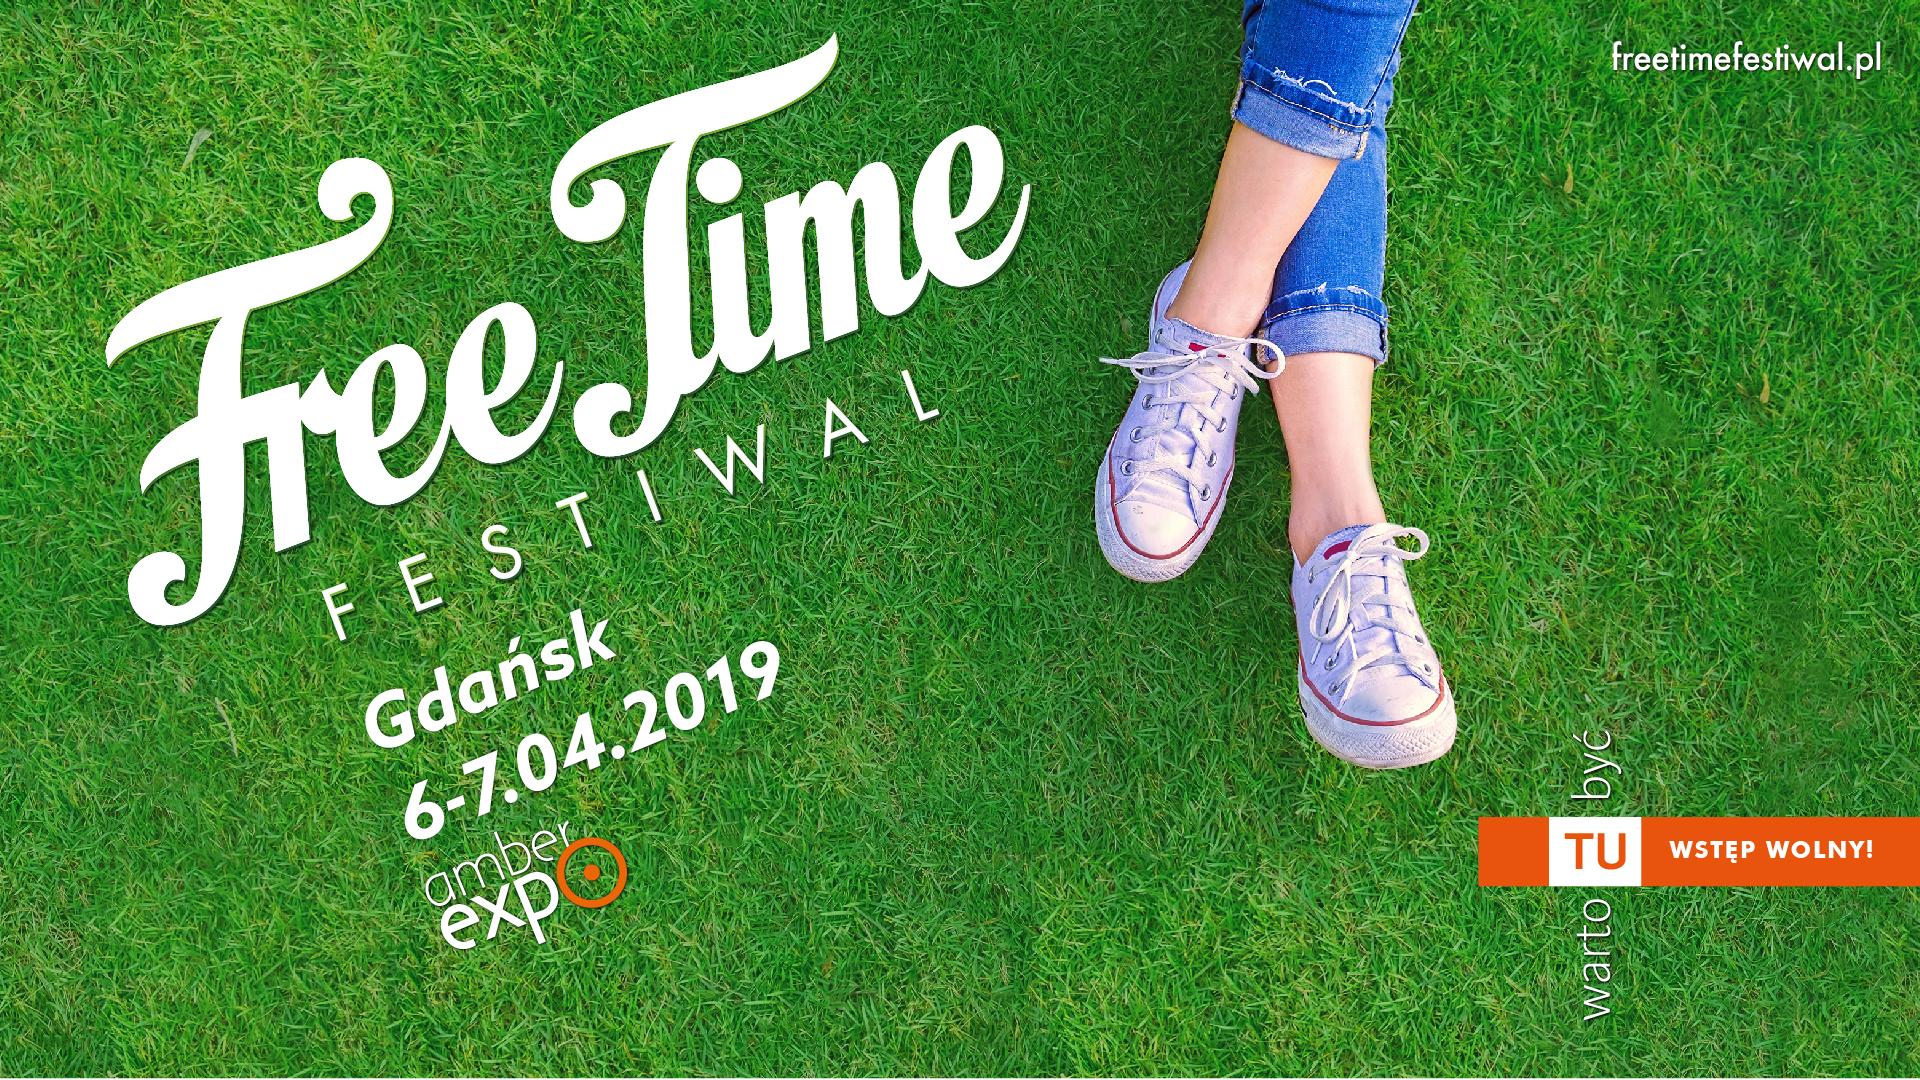 free time festiwal 2019